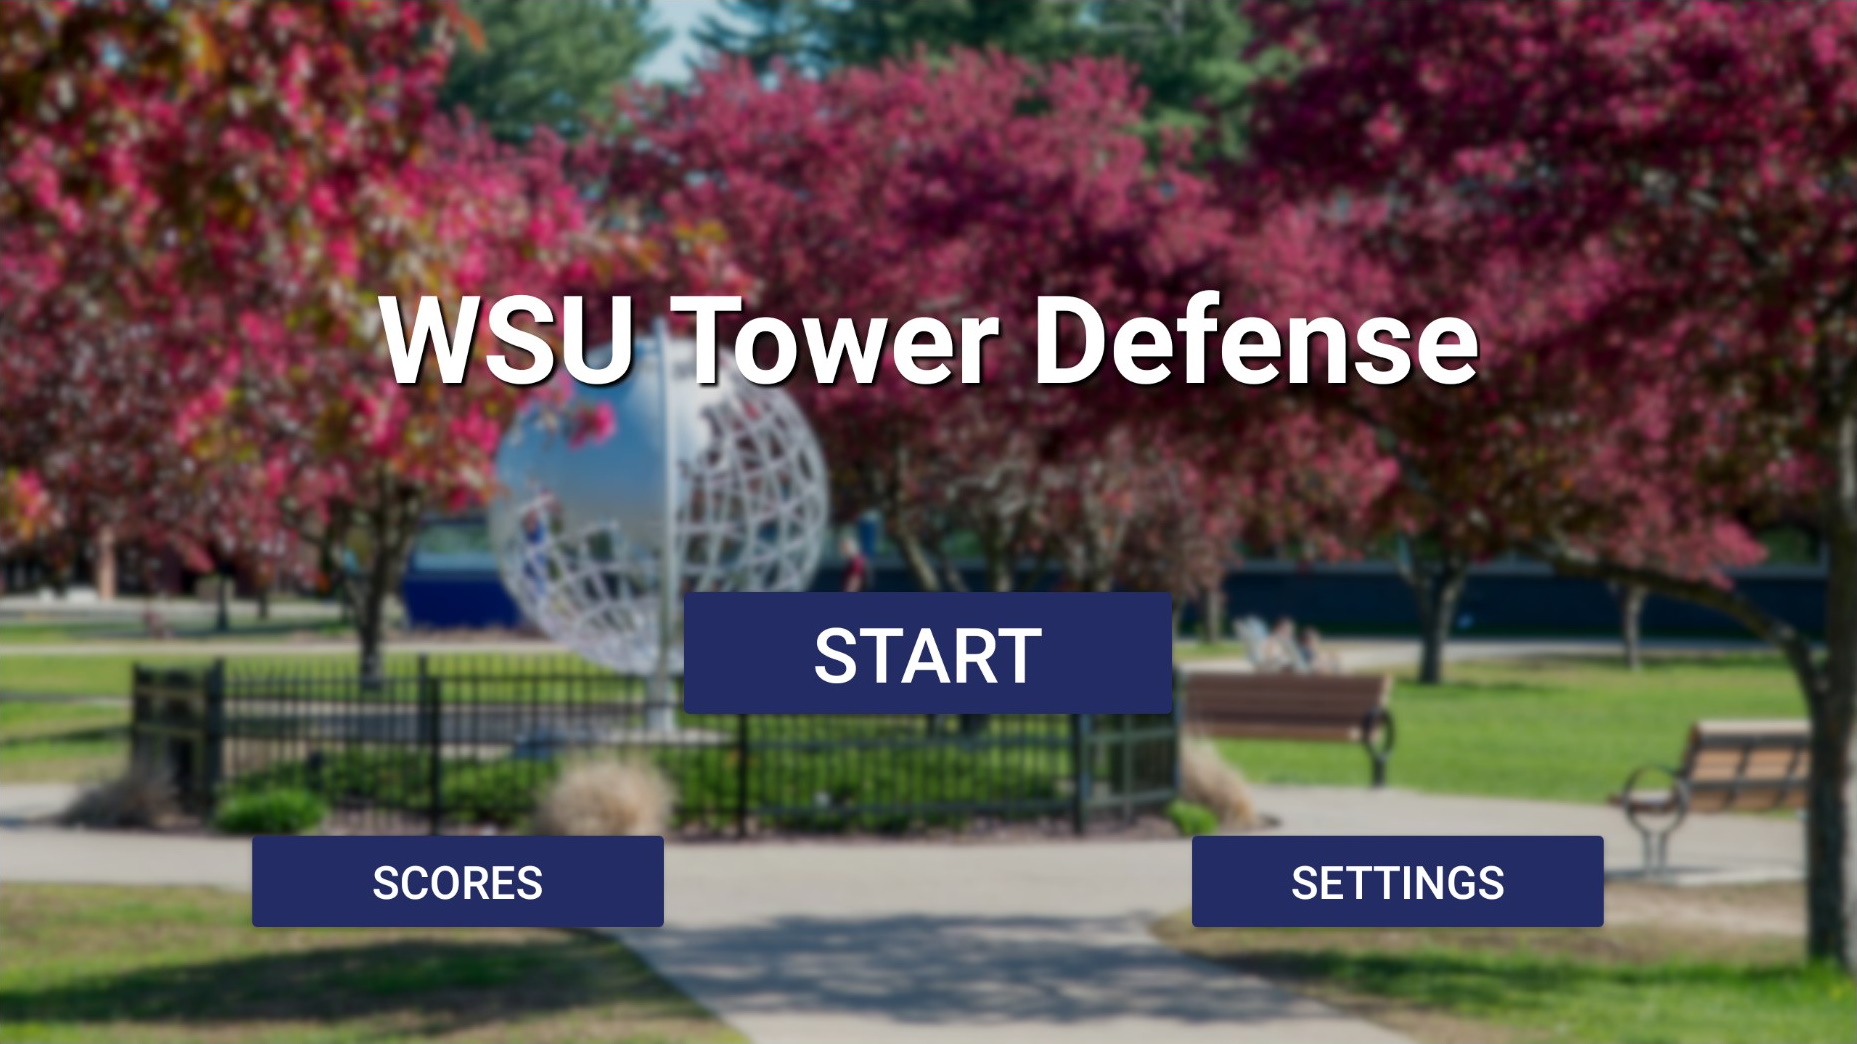  WSU Tower Defense image